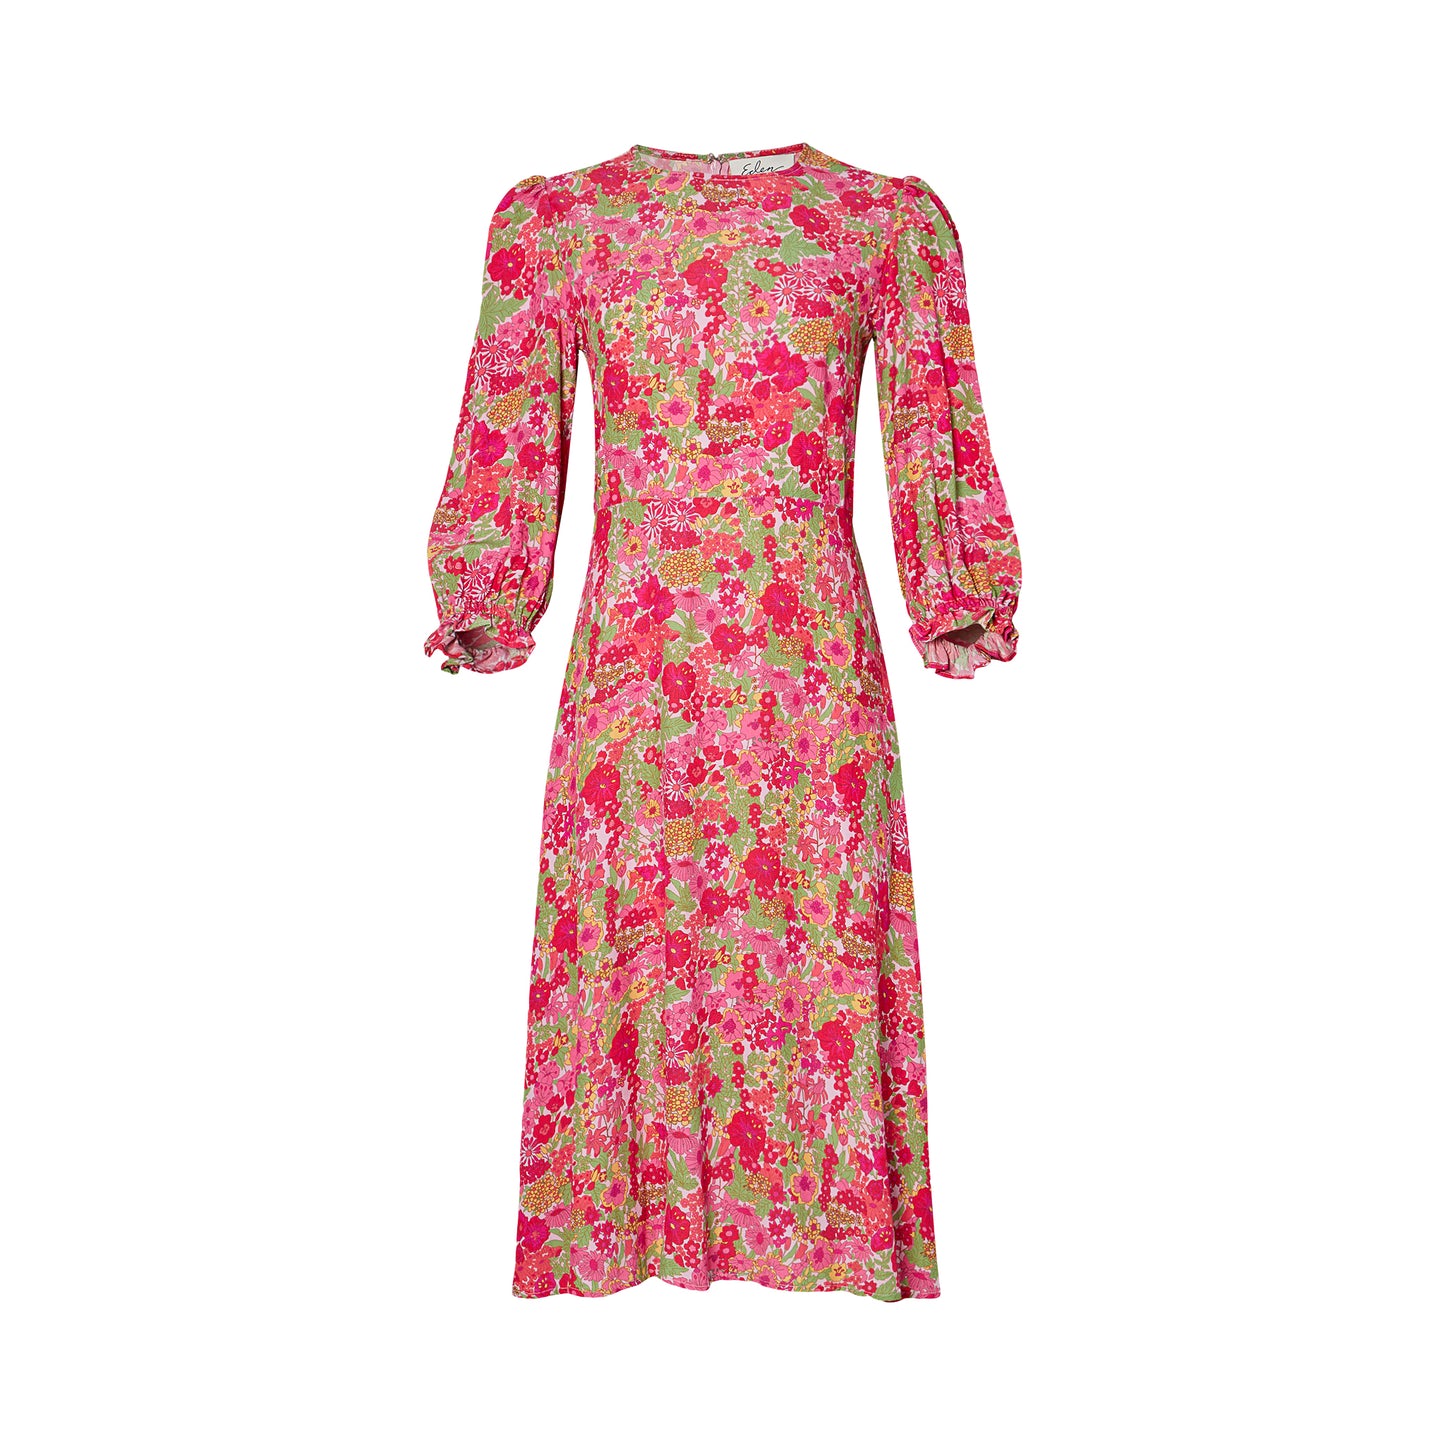 Spring/Summer modest flowy midi dress  medium pink floral pattern three quarter length sleeve